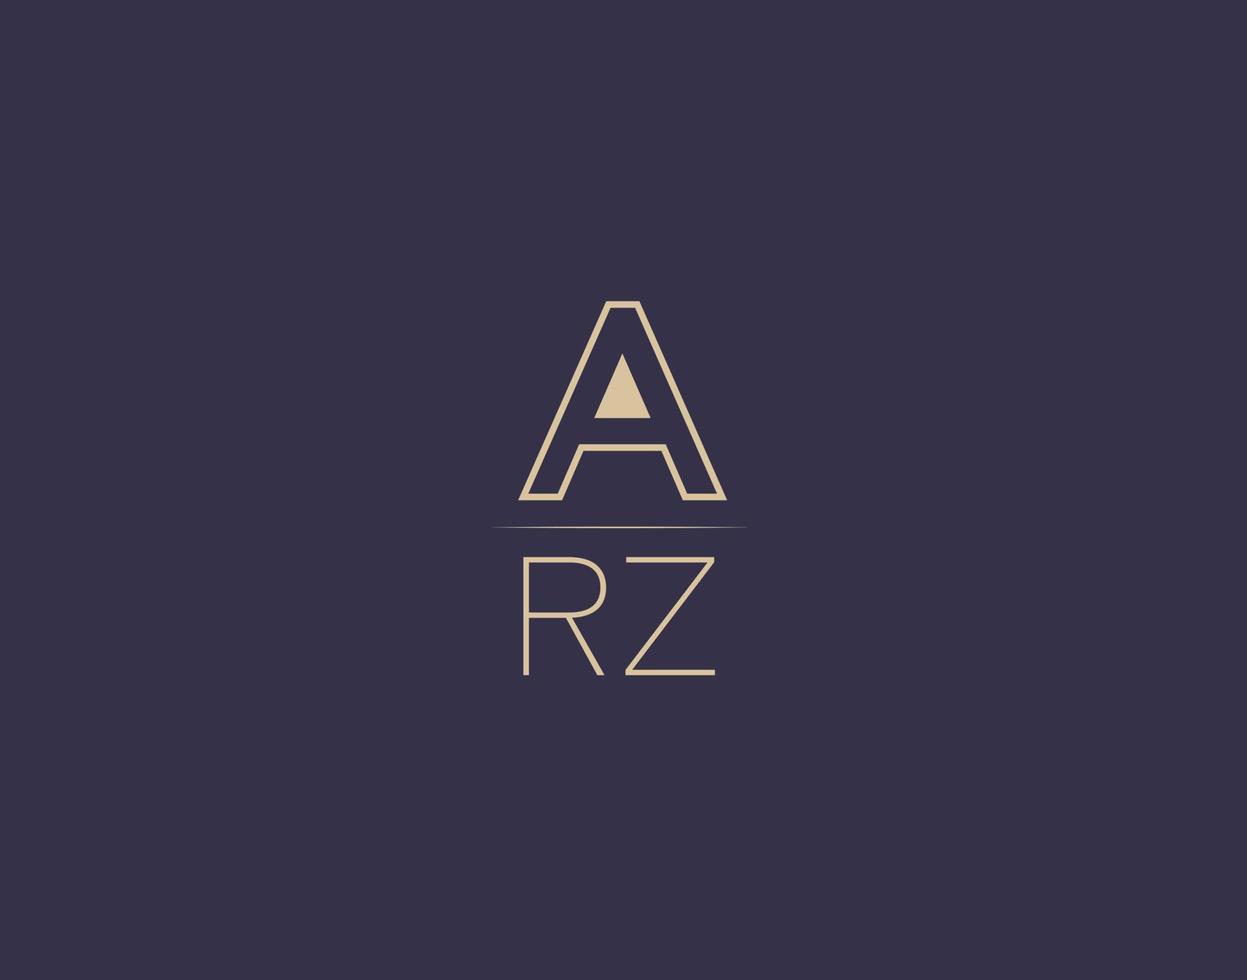 arz letter logo design imagens vetoriais minimalistas modernas vetor